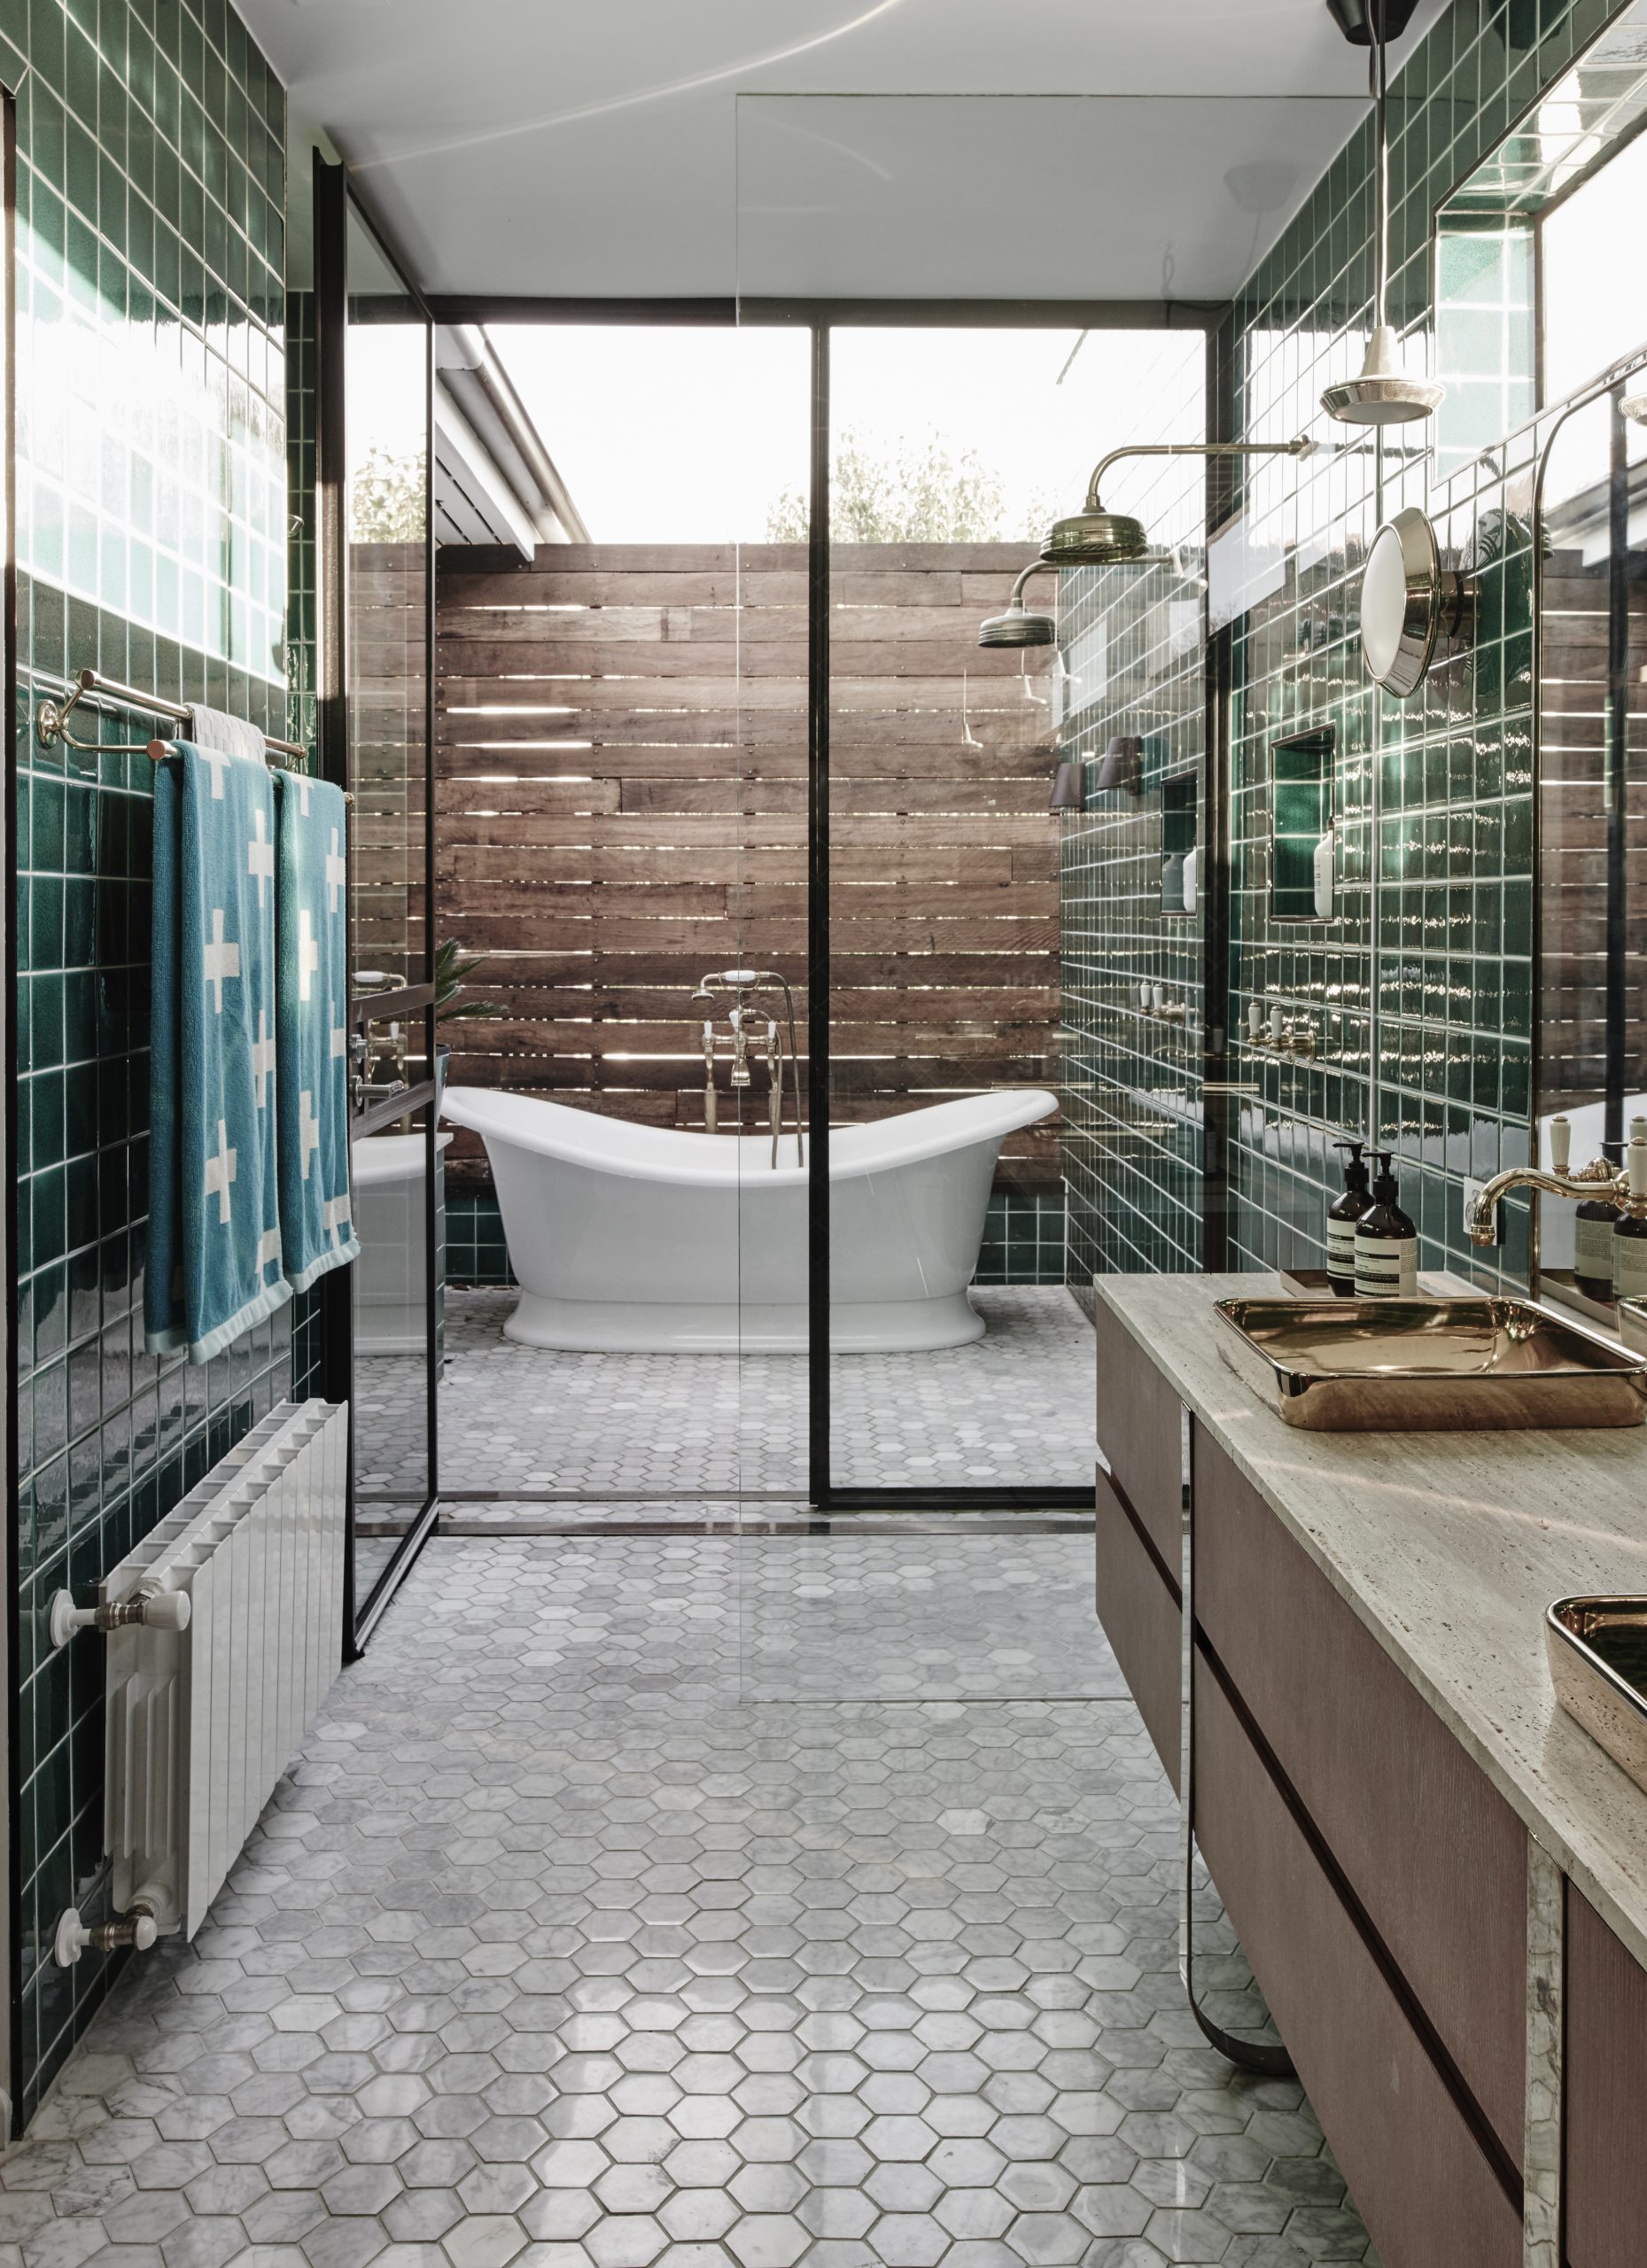 Victoria + Albert: Bathroom Solutions